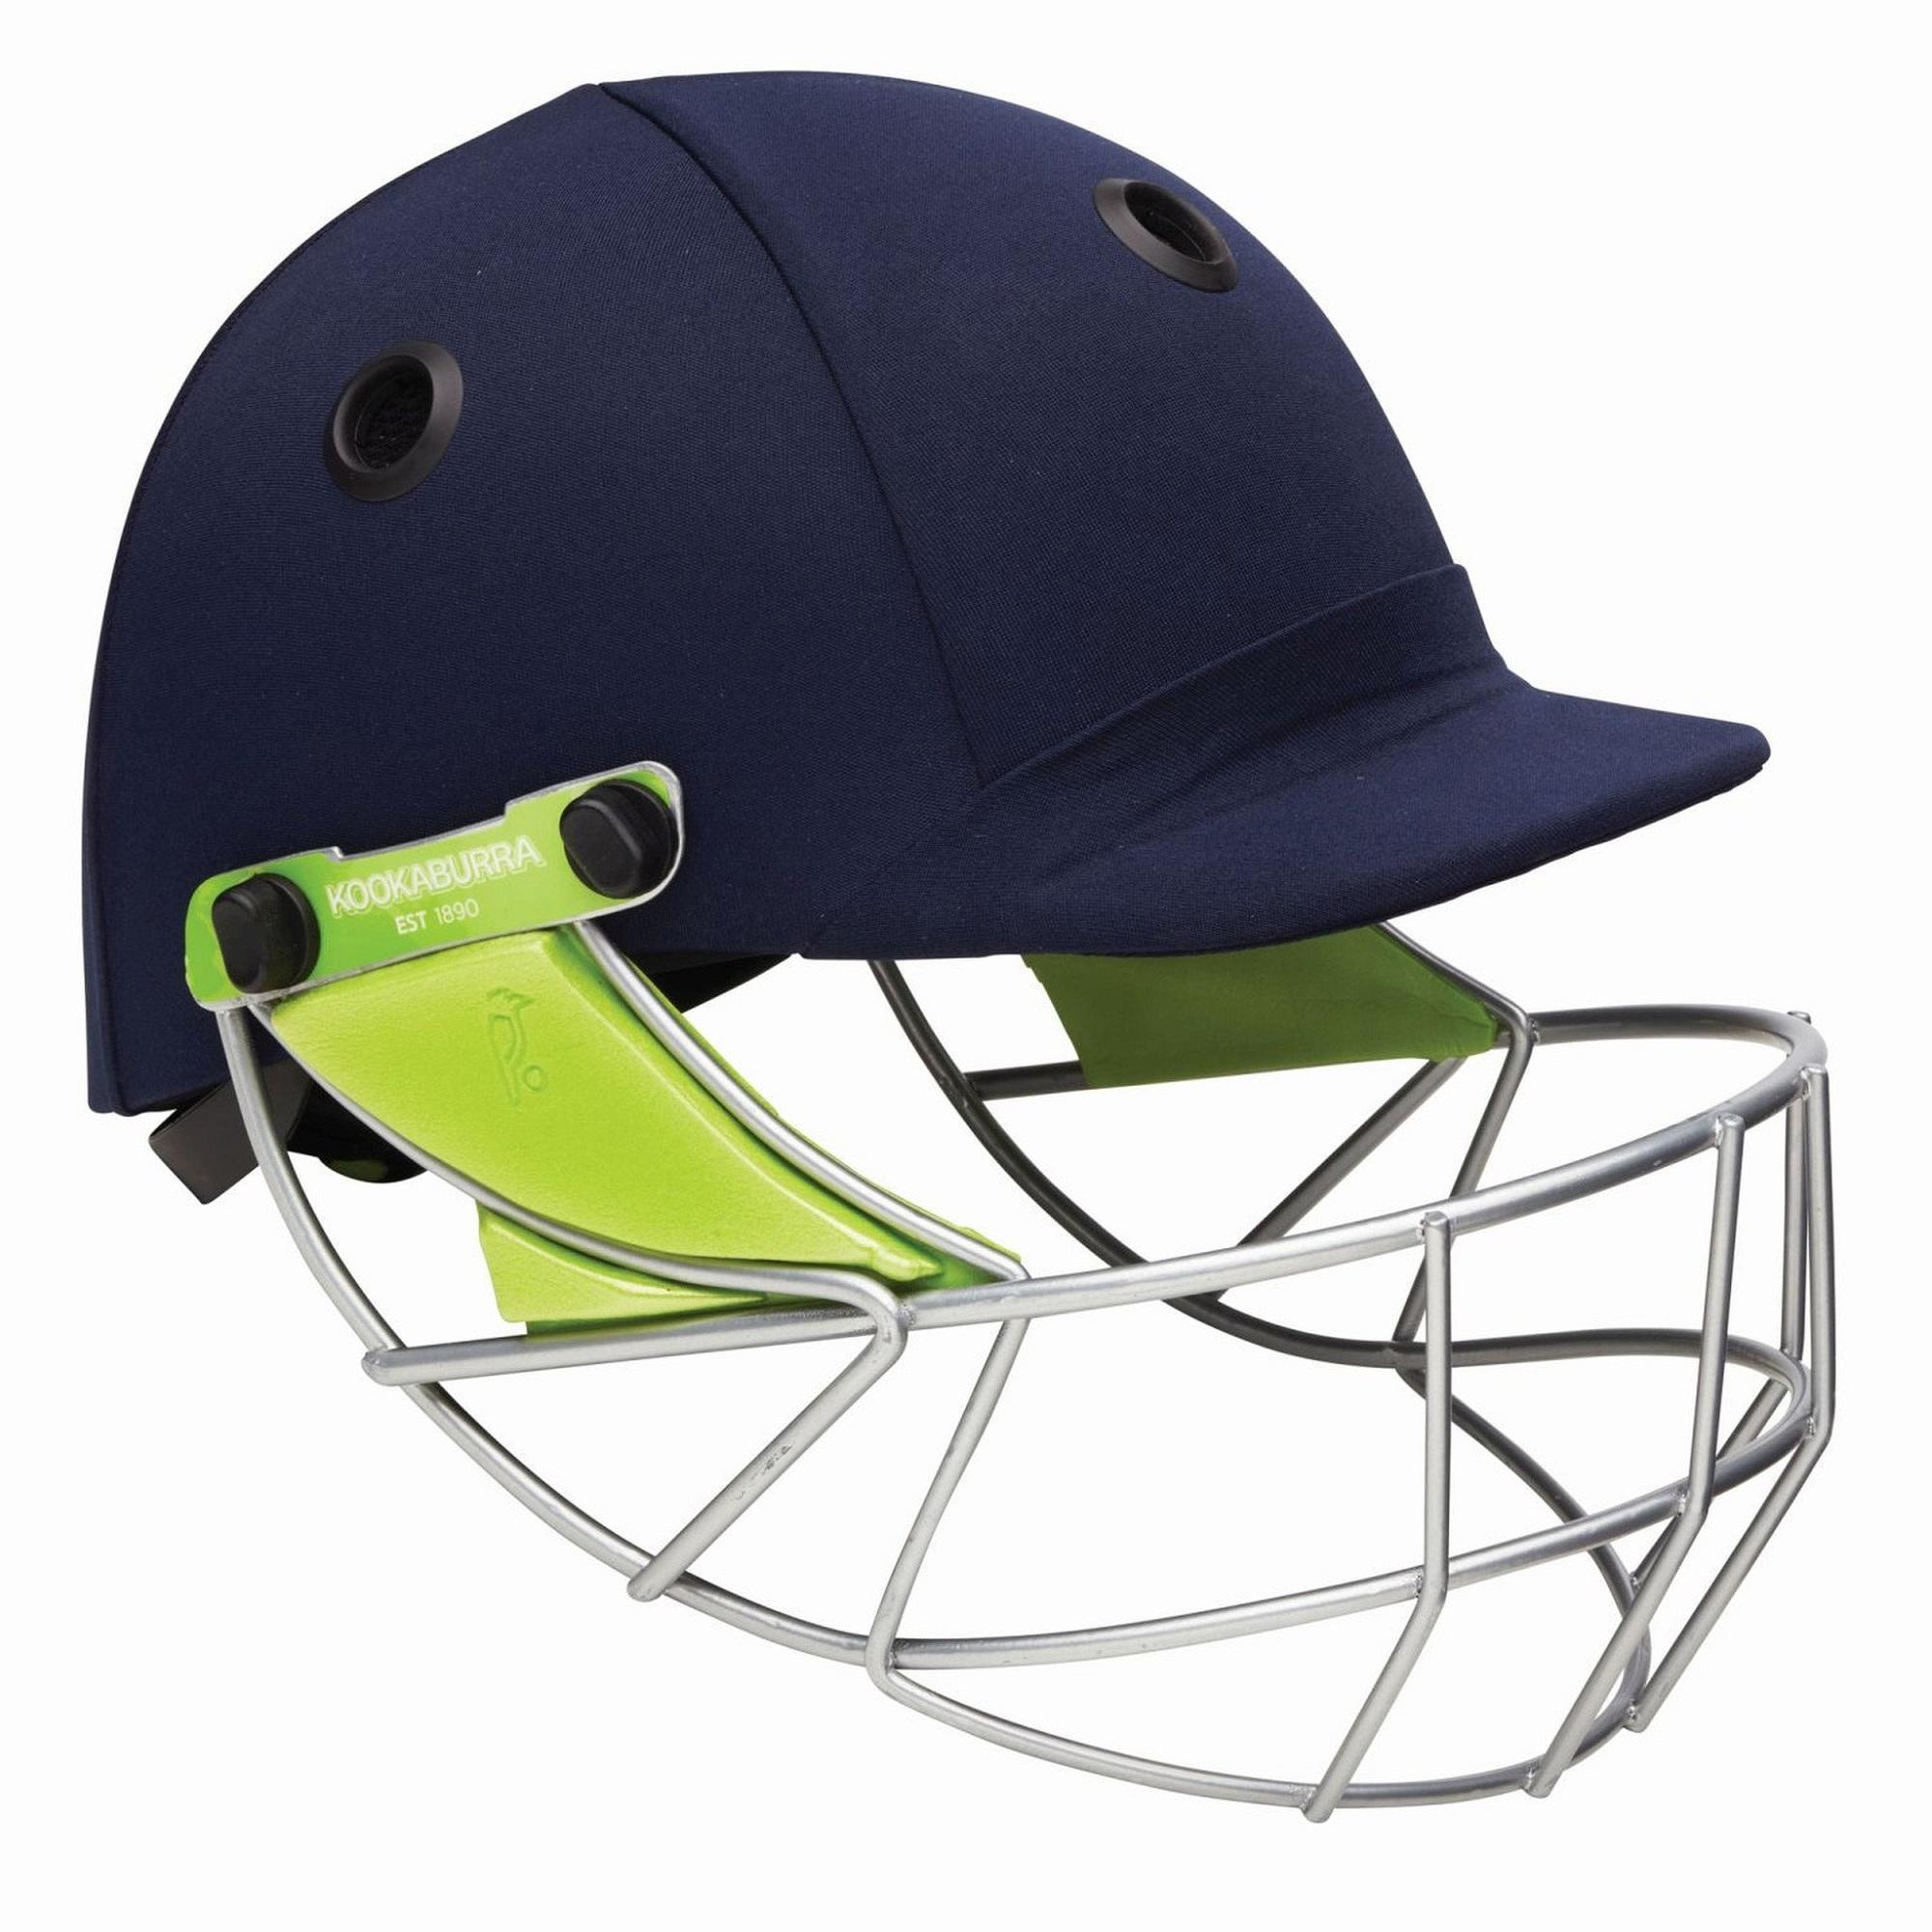 cricket helmet decathlon